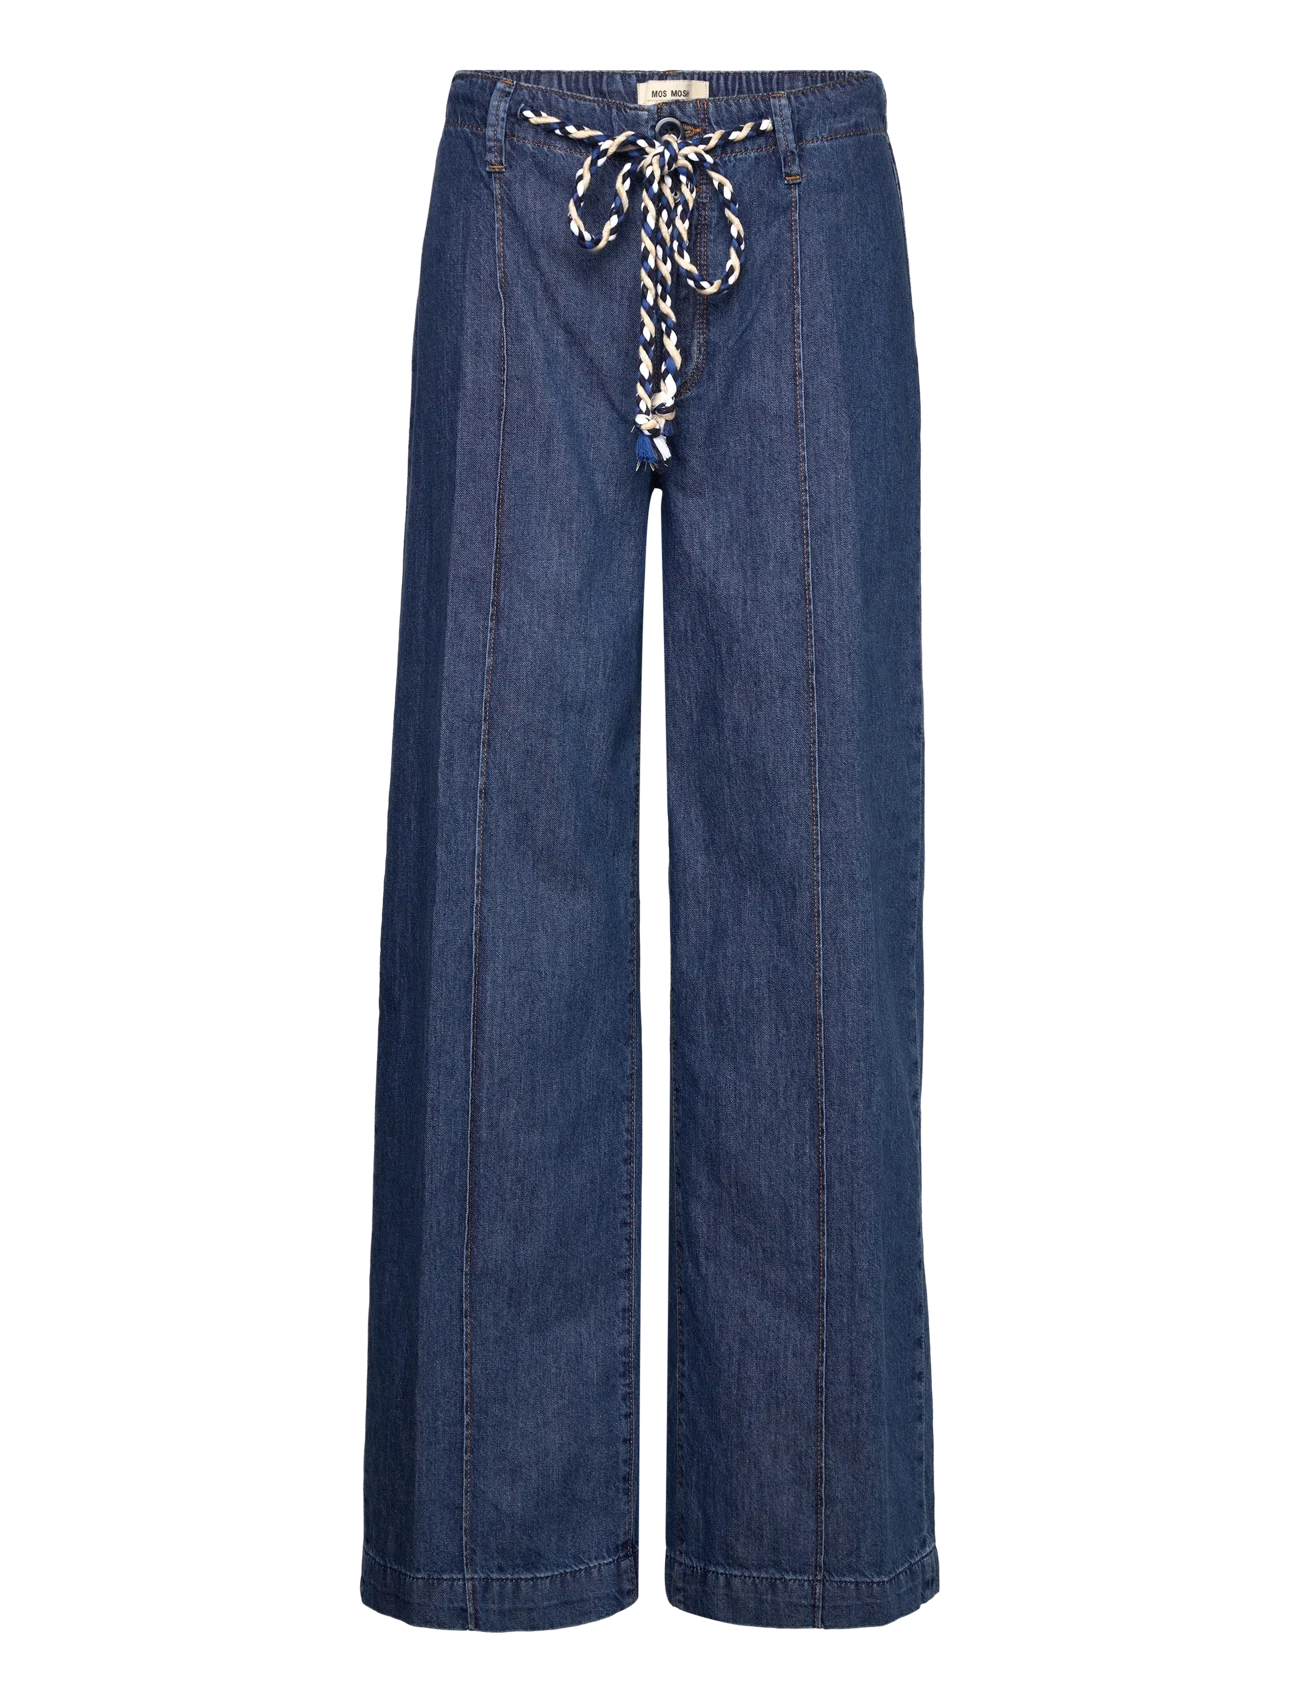 Mos Mosh - Emilia String Jeans Dark Blue